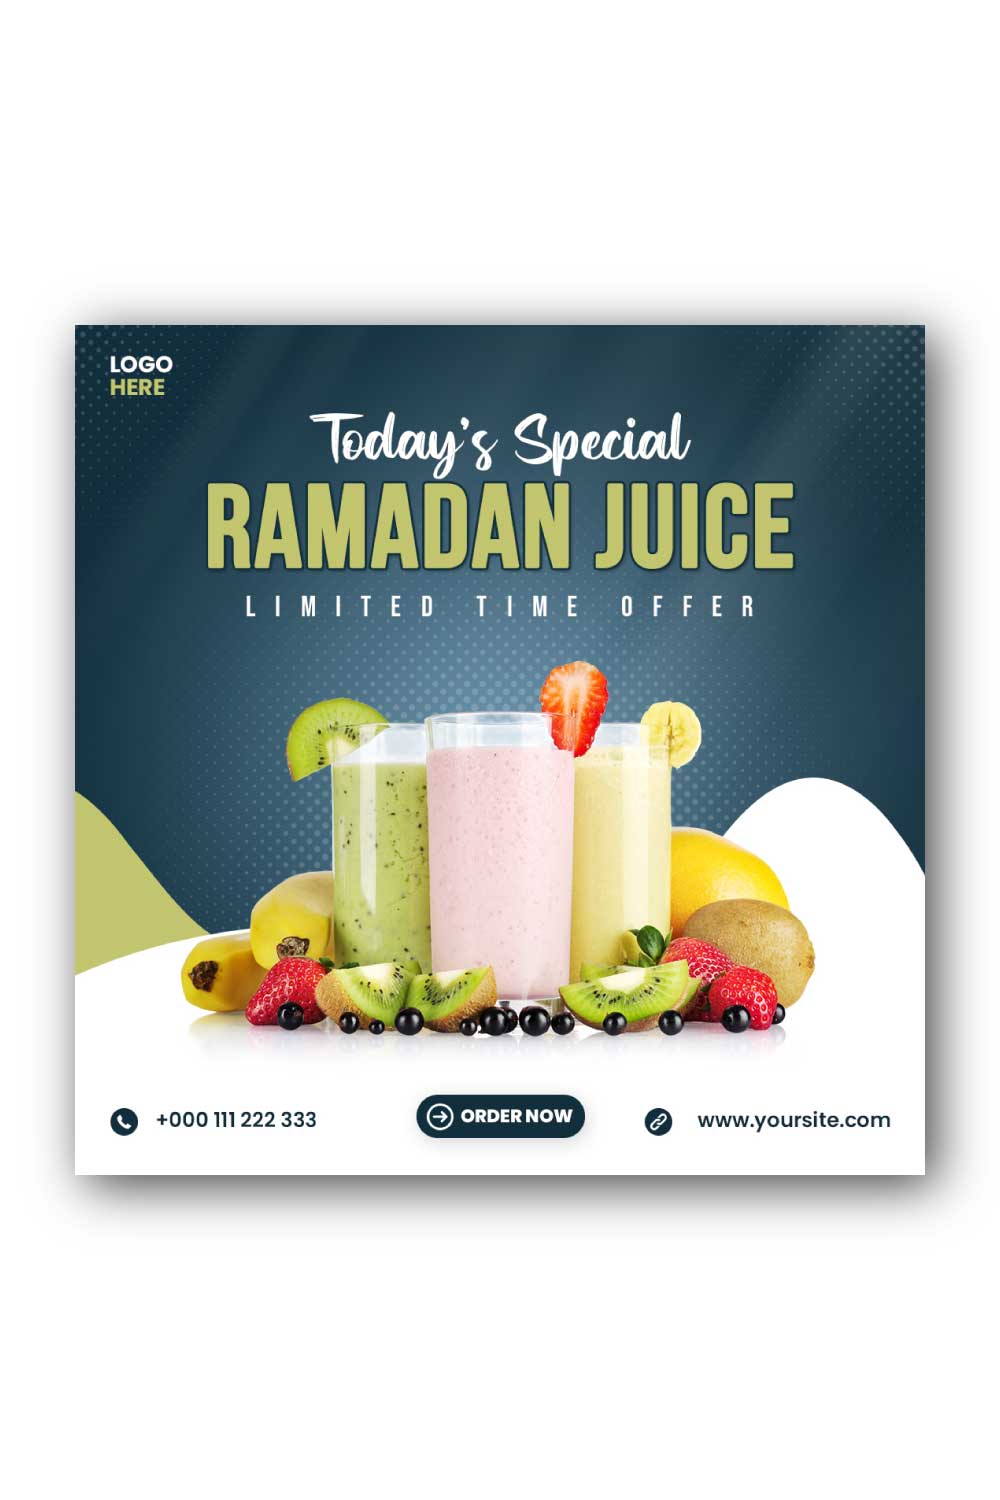 Ramadan juice Social Media Instagram Post Template pinterest preview image.